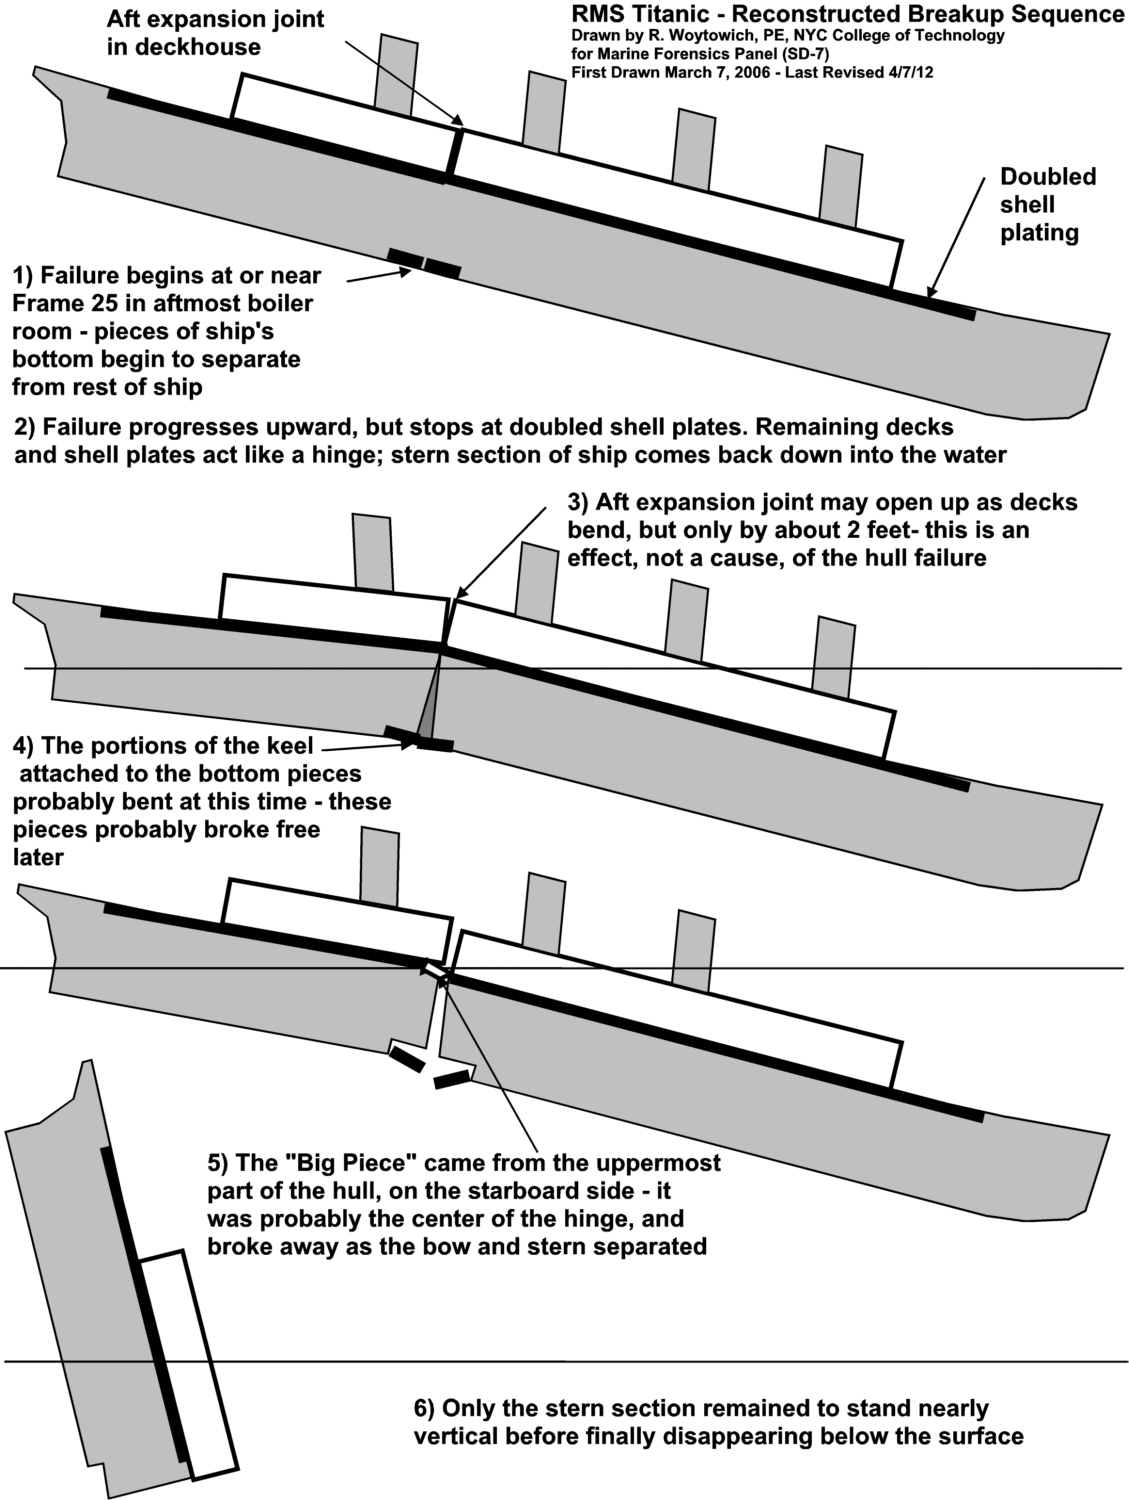 TitanicBreakupReconstruction 